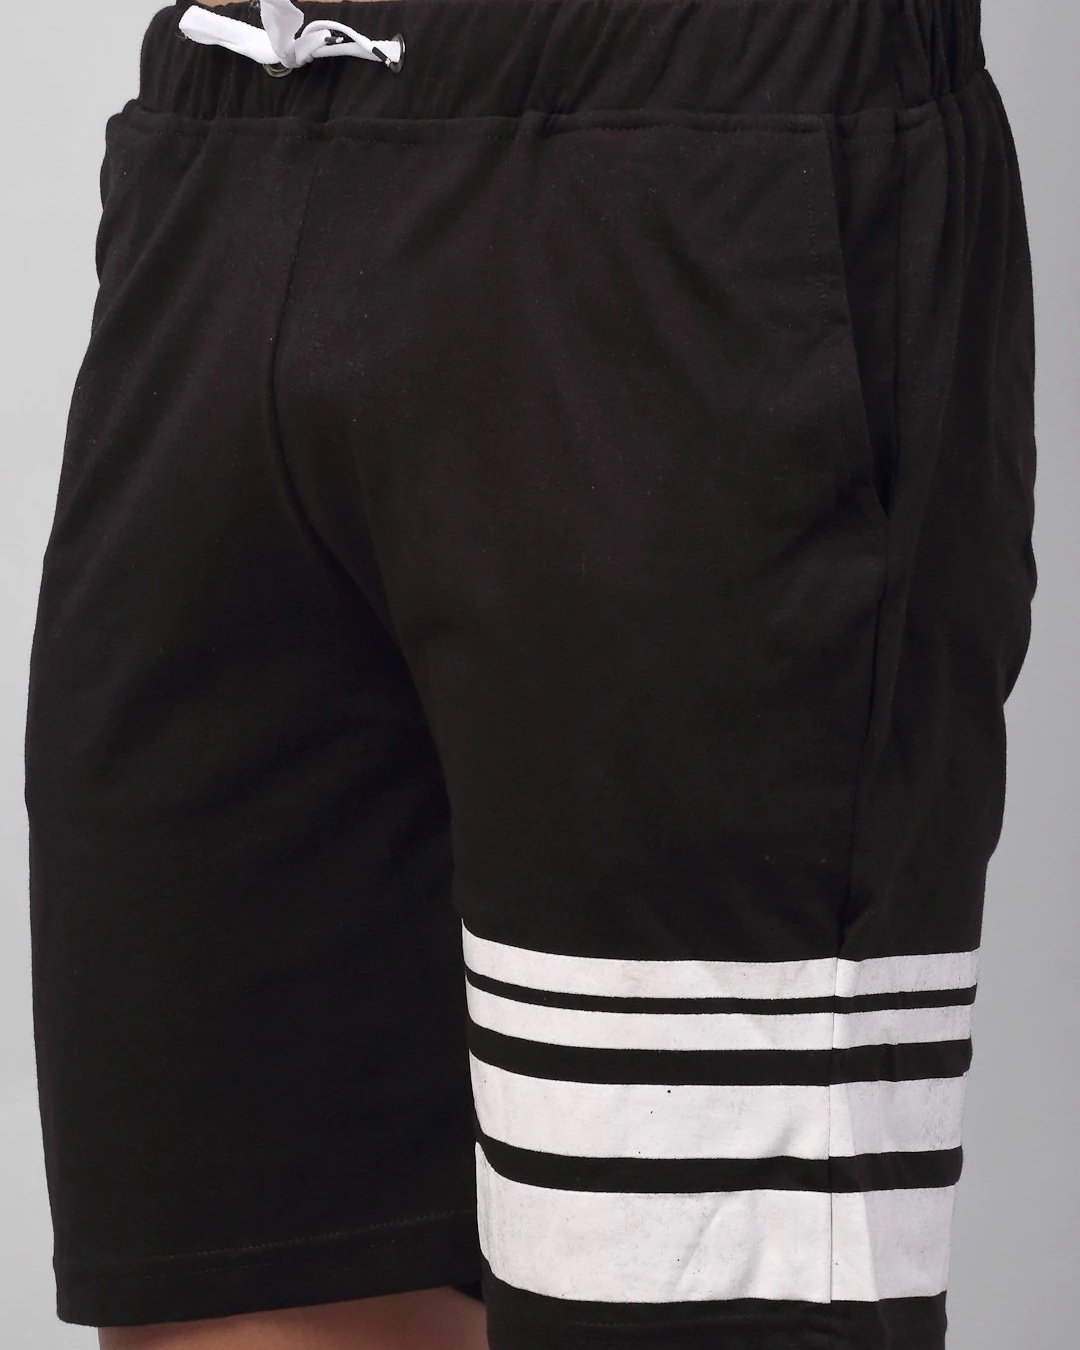 Shop Men's Black Striped Shorts